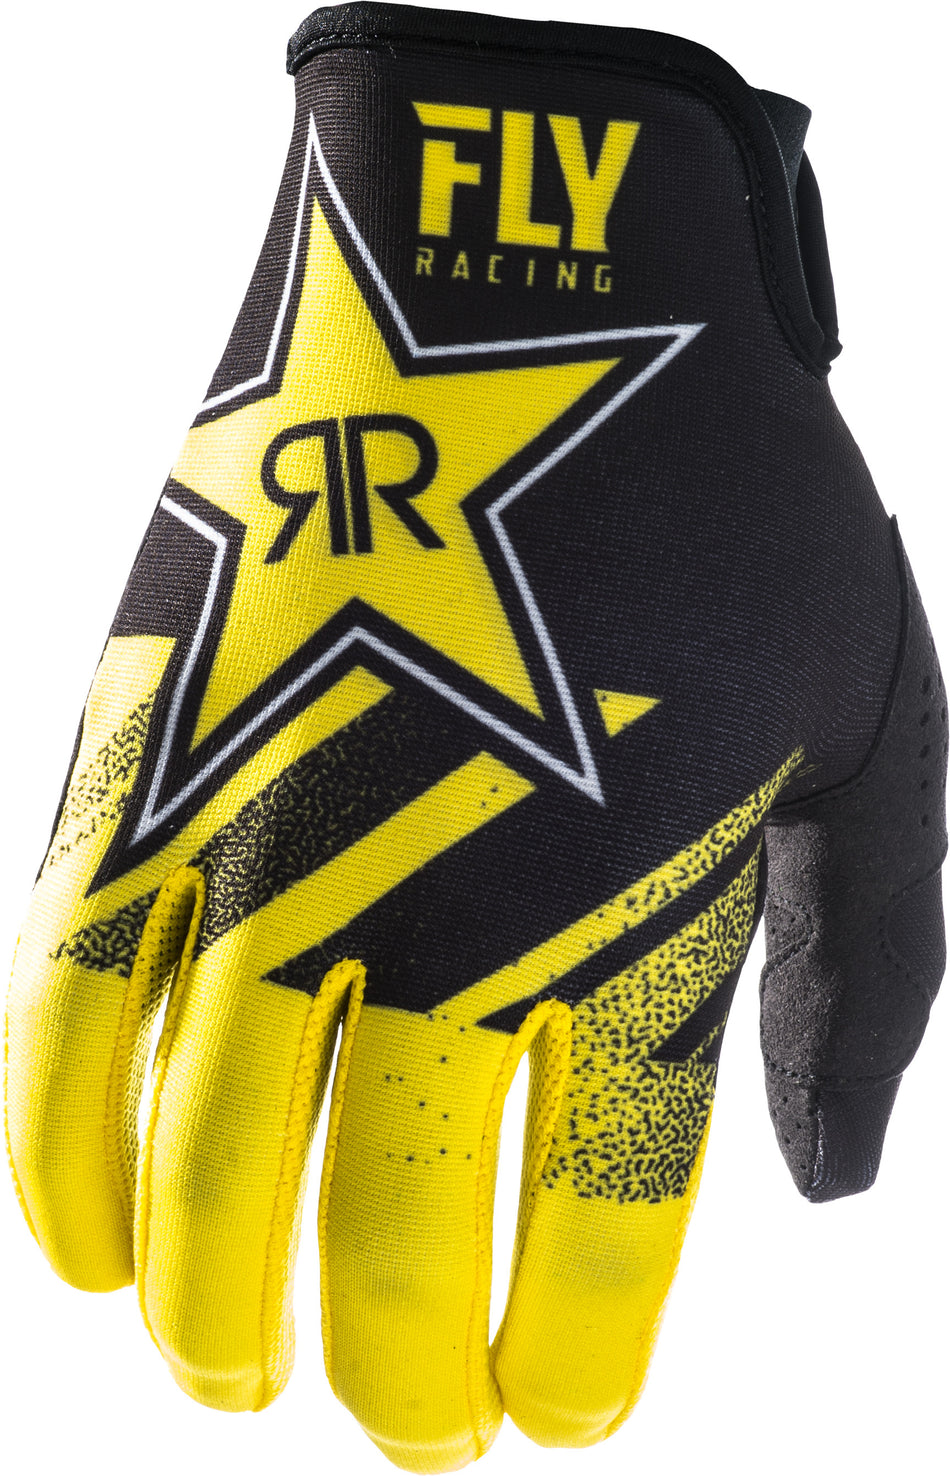 FLY RACING Lite Hydrogen Rockstar Gloves Yellow/Black Sz 12 372-01812